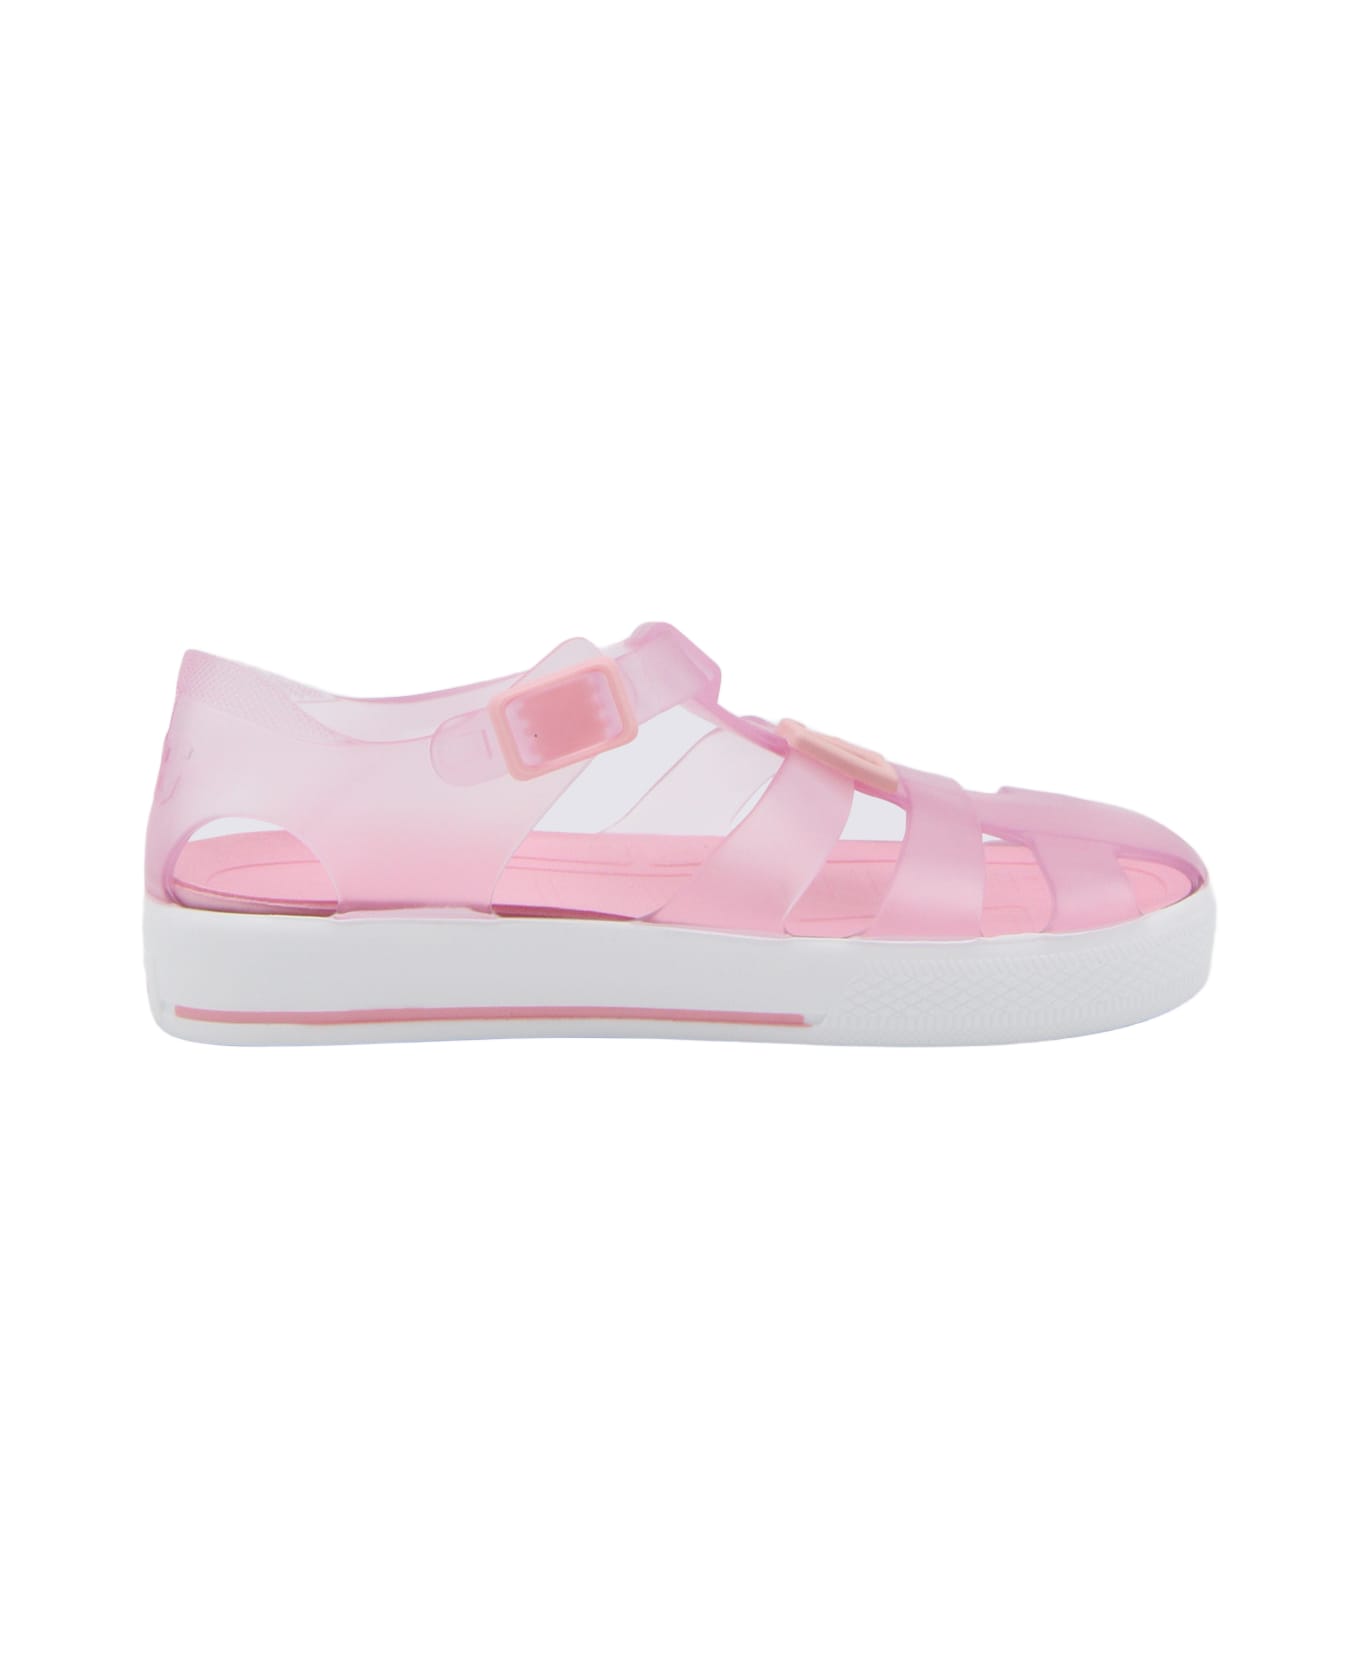 Dolce & Gabbana Pink Rubber Sandals - Pink